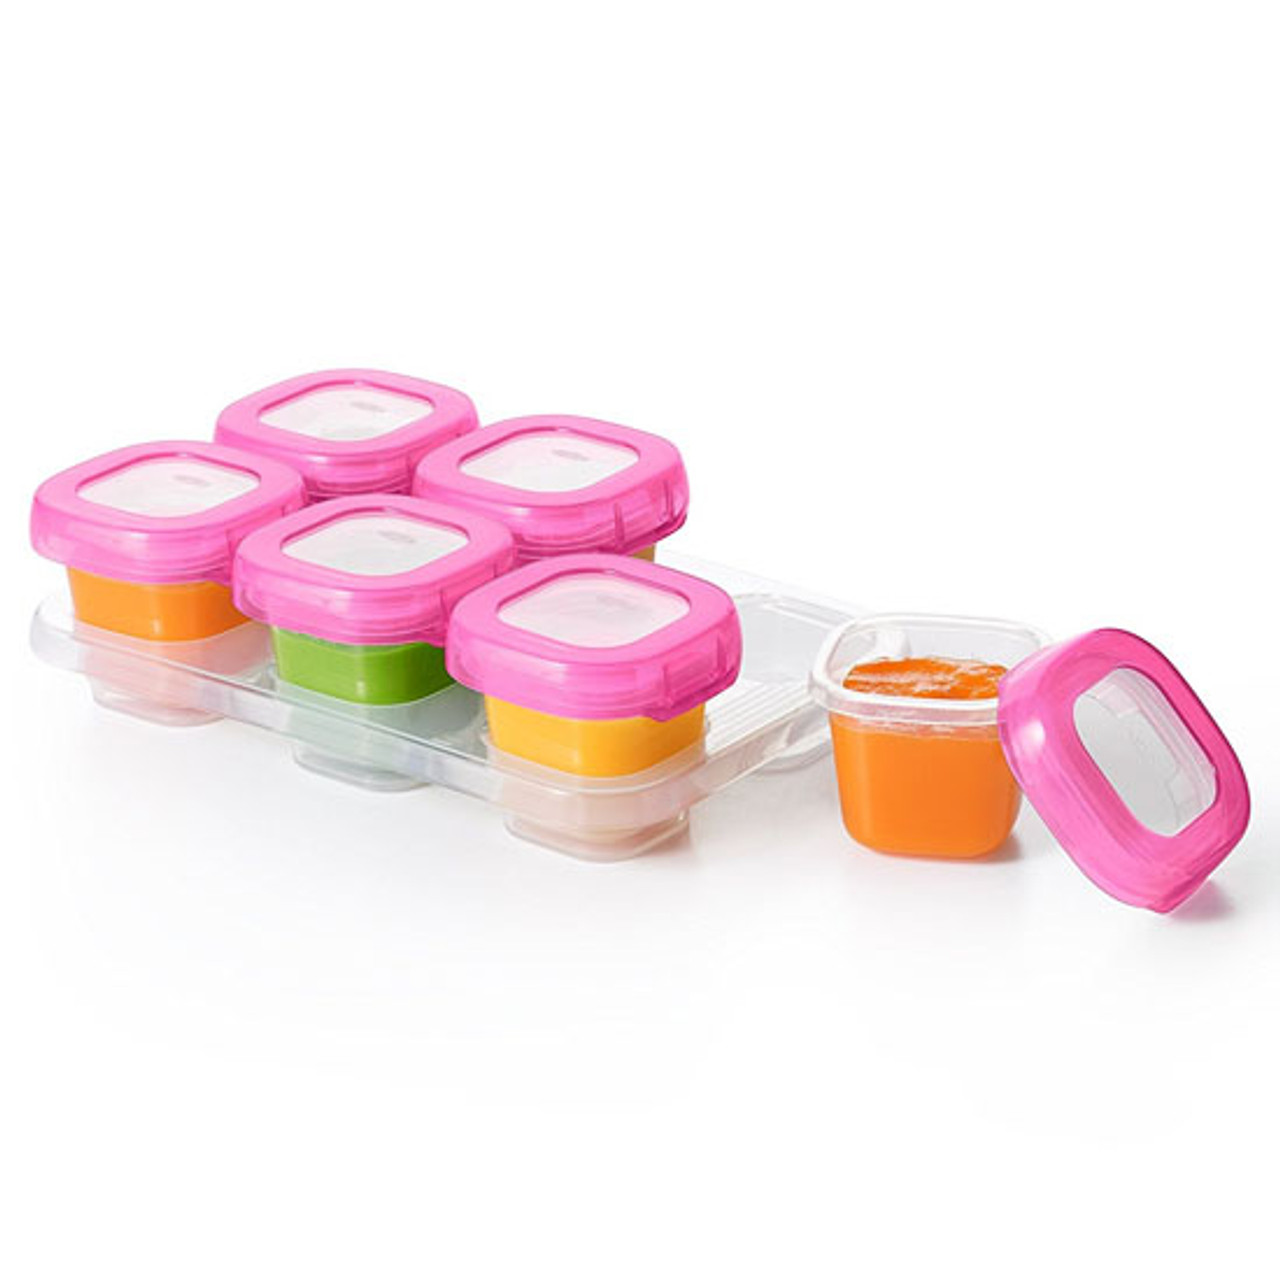 OXO Tot 2 oz. Baby Blocks Pink Freezer Storage Containers